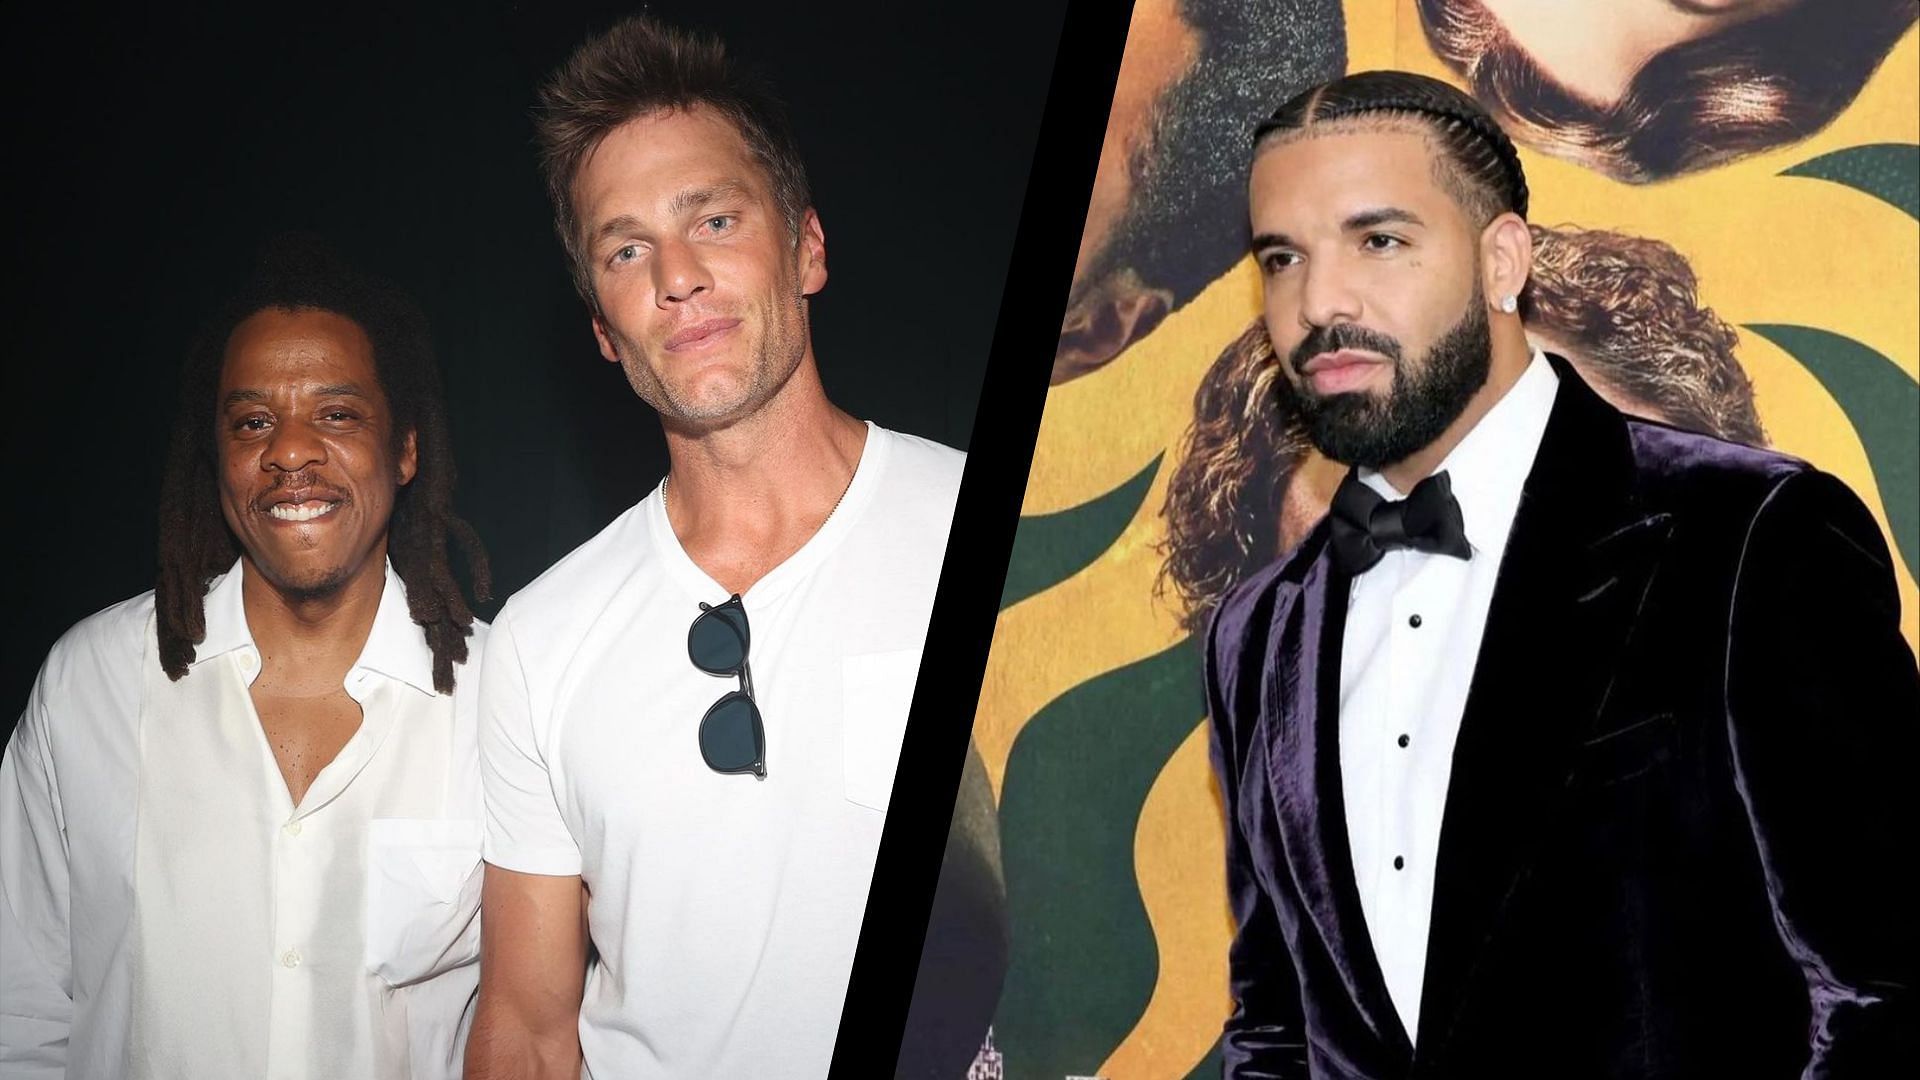 WATCH: Tom Brady rolls up to Drake concert in Miami 